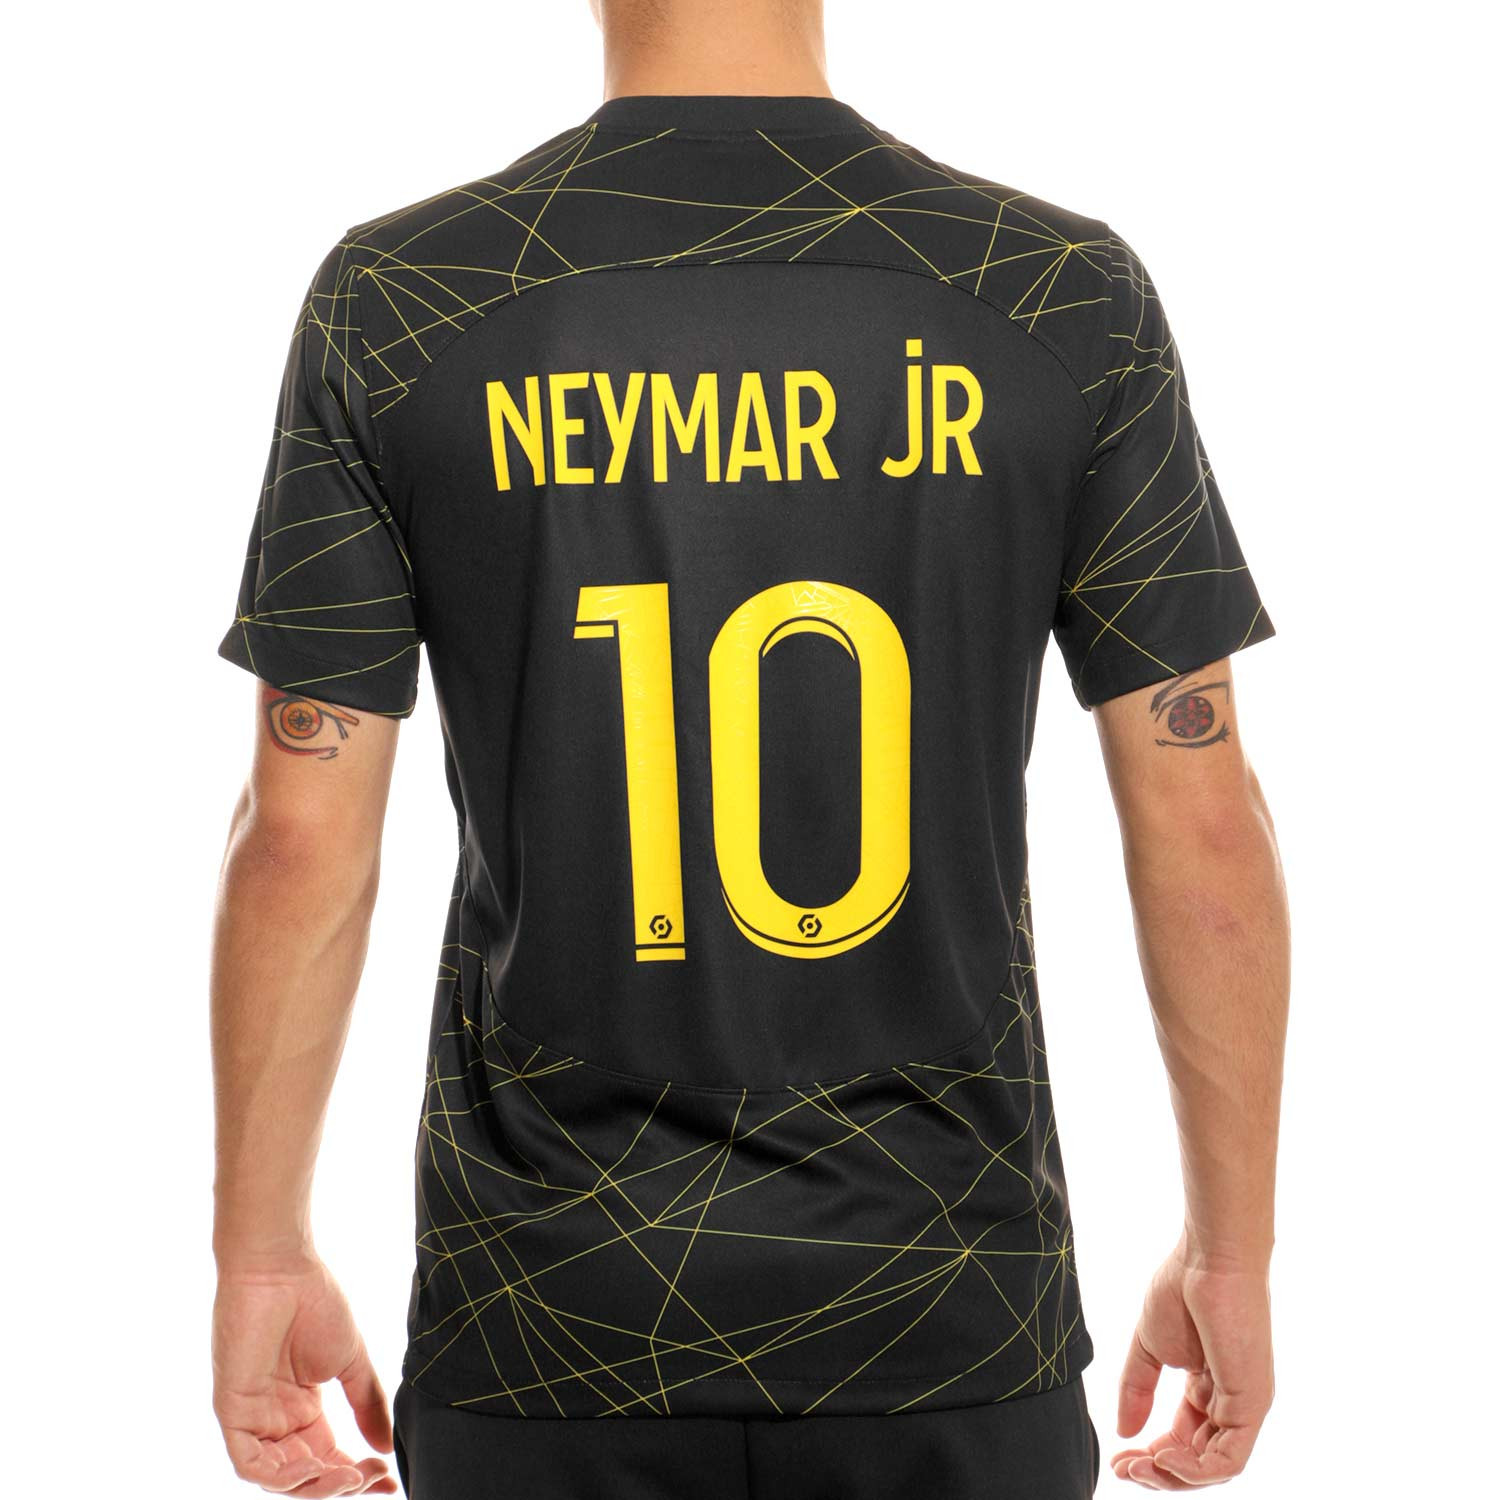 Neymar camiseta